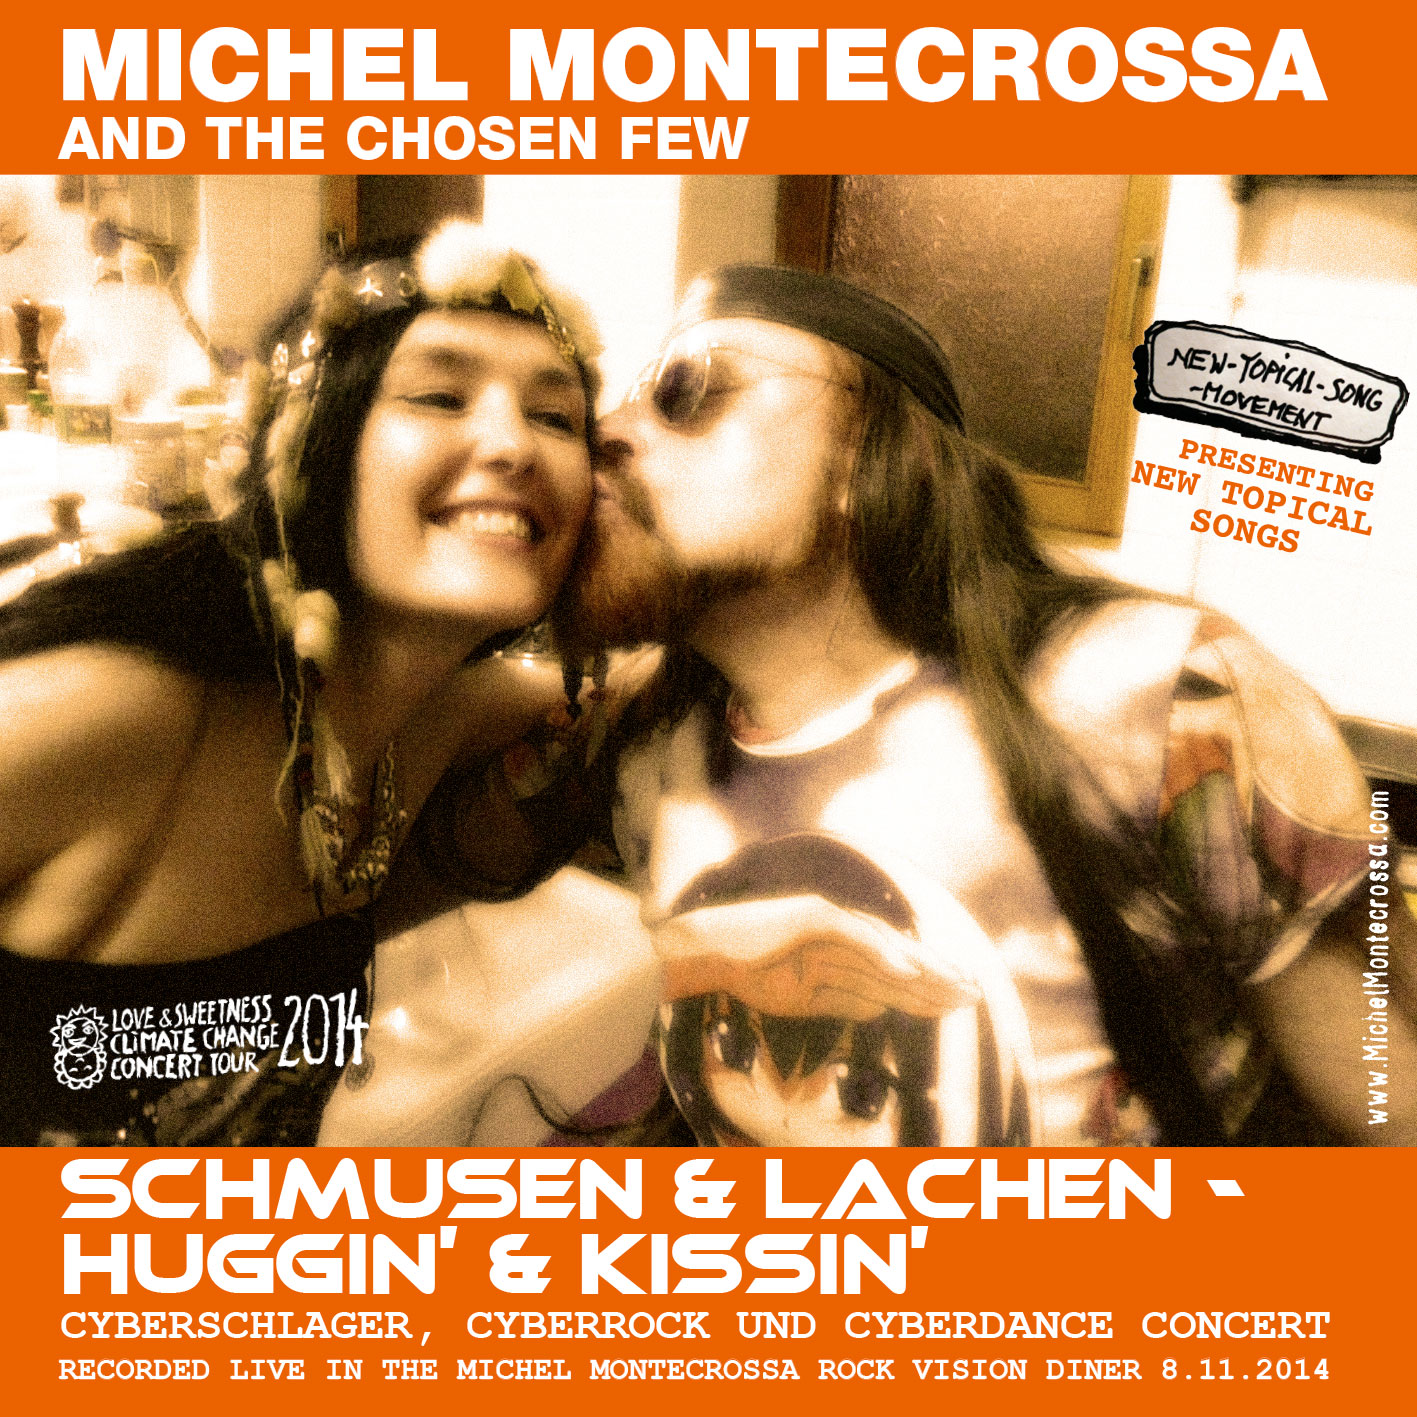 Schmusen & Lachen - Huggin' & Kissin' Concert